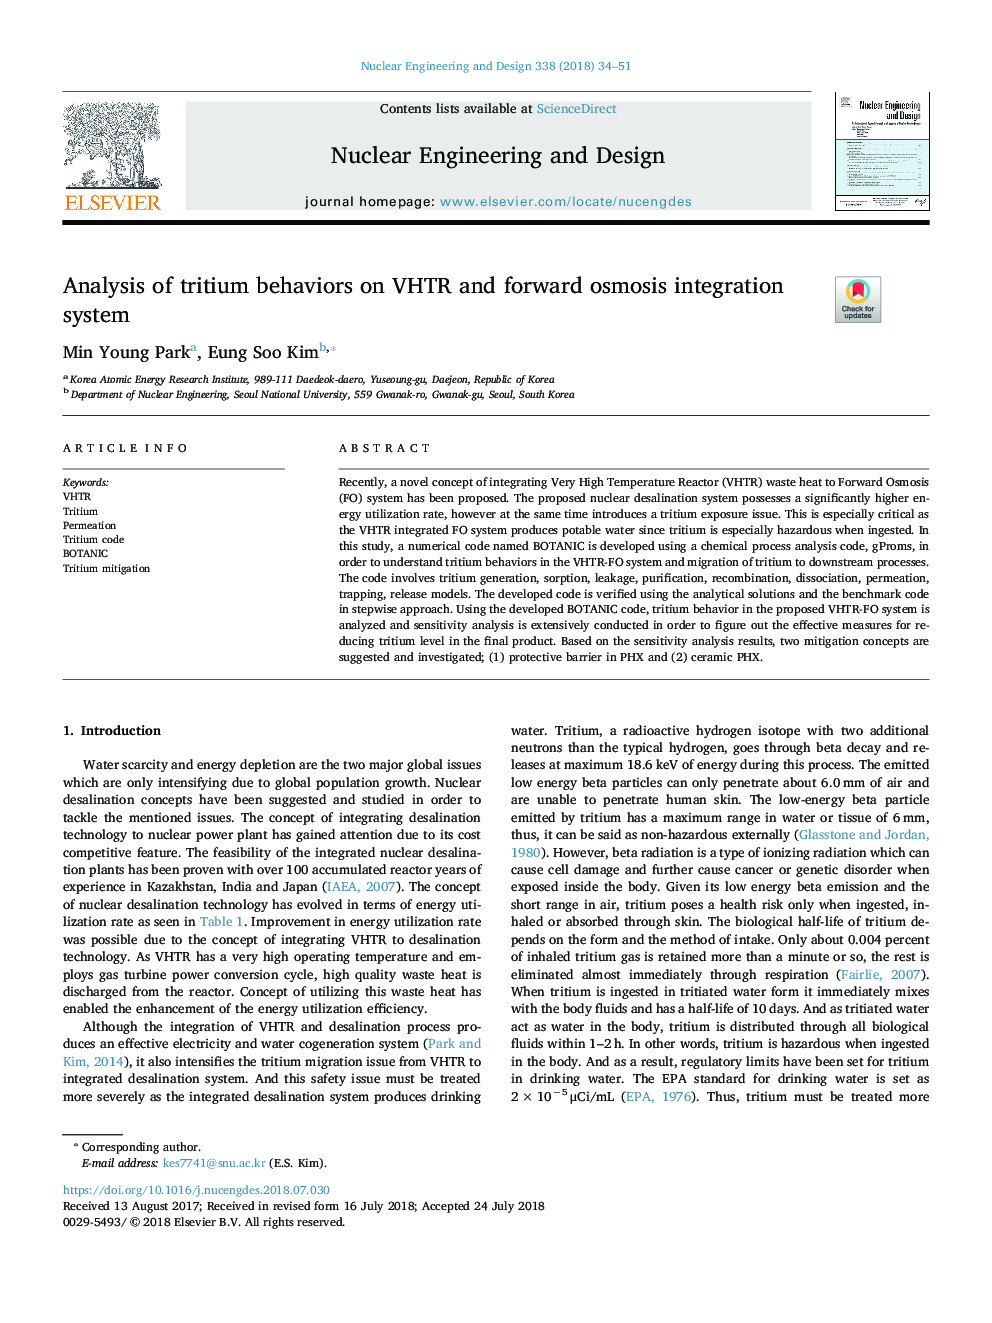 Analysis of tritium behaviors on VHTR and forward osmosis integration system